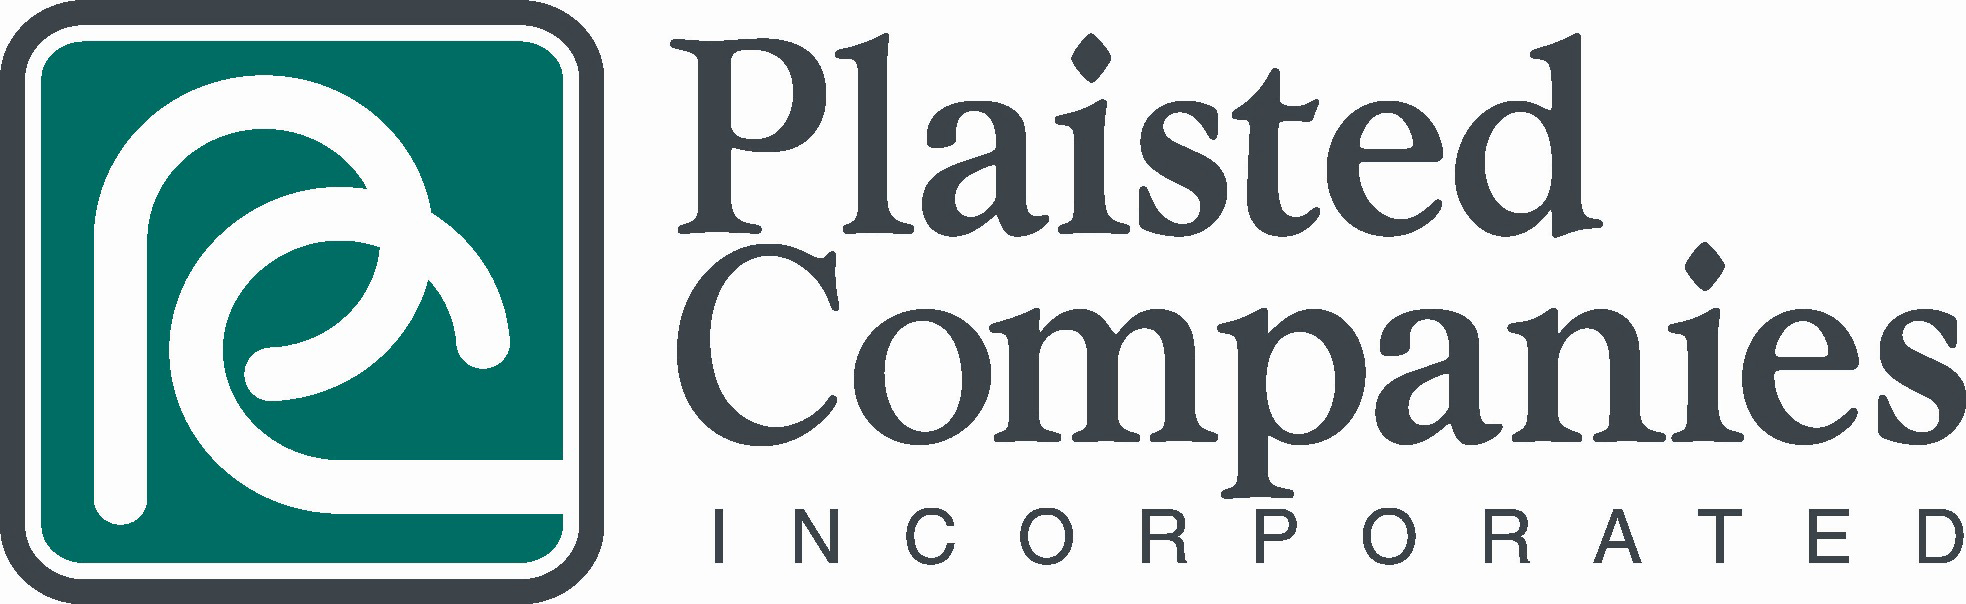 Plaisted Companies, Inc.'s Image